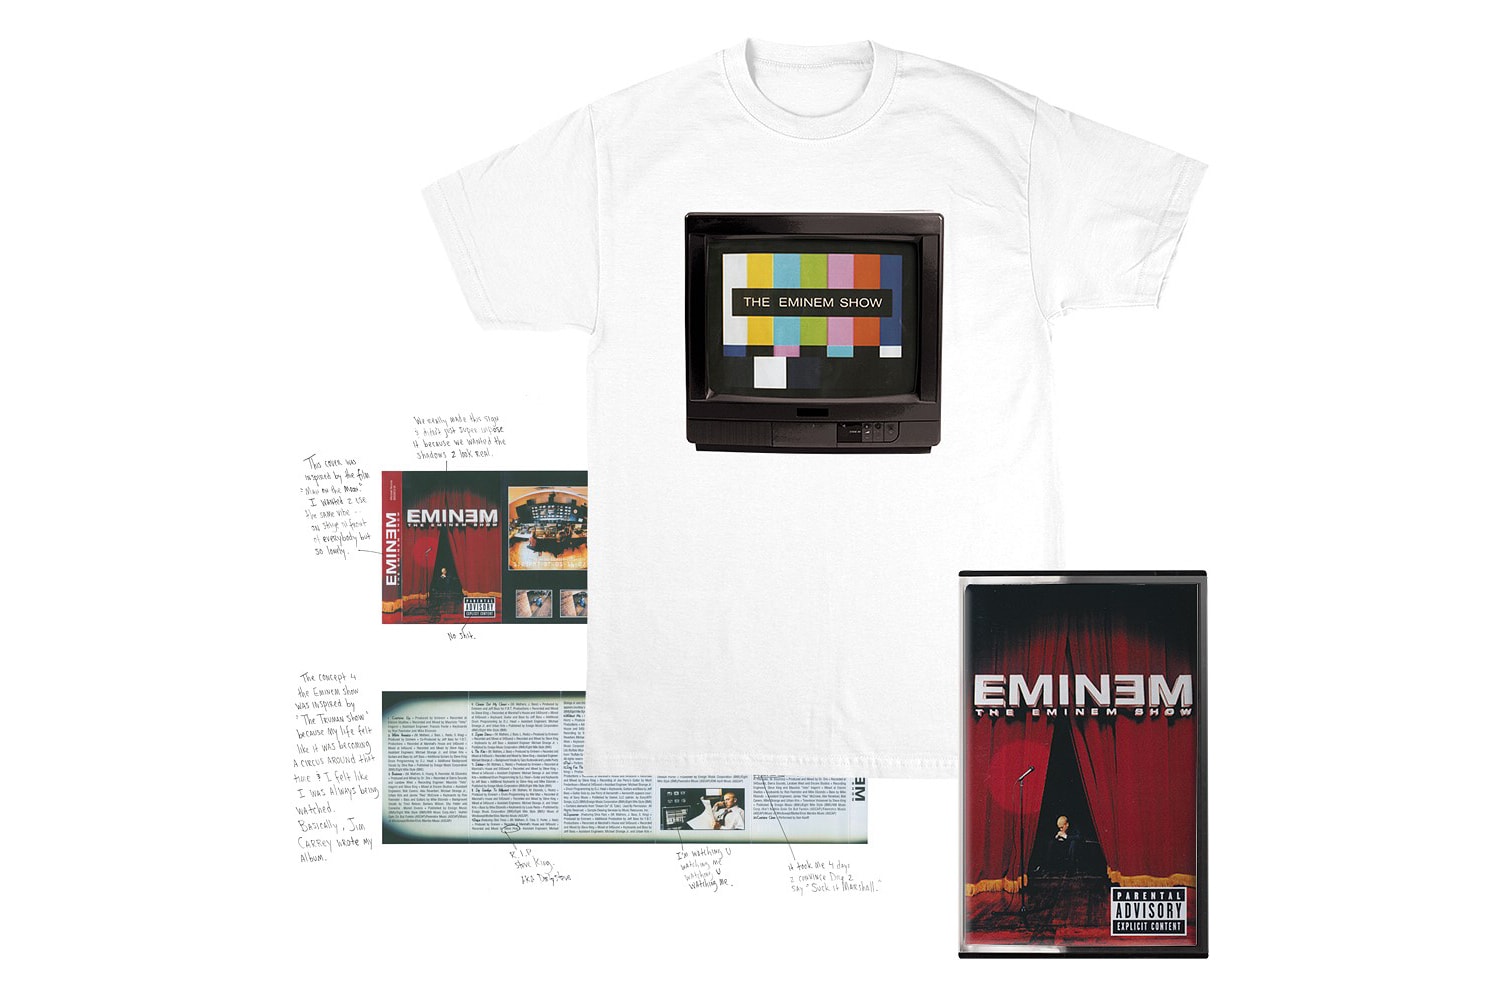 eminem 为专辑《The Eminem Show》推出 15 周年纪念产品